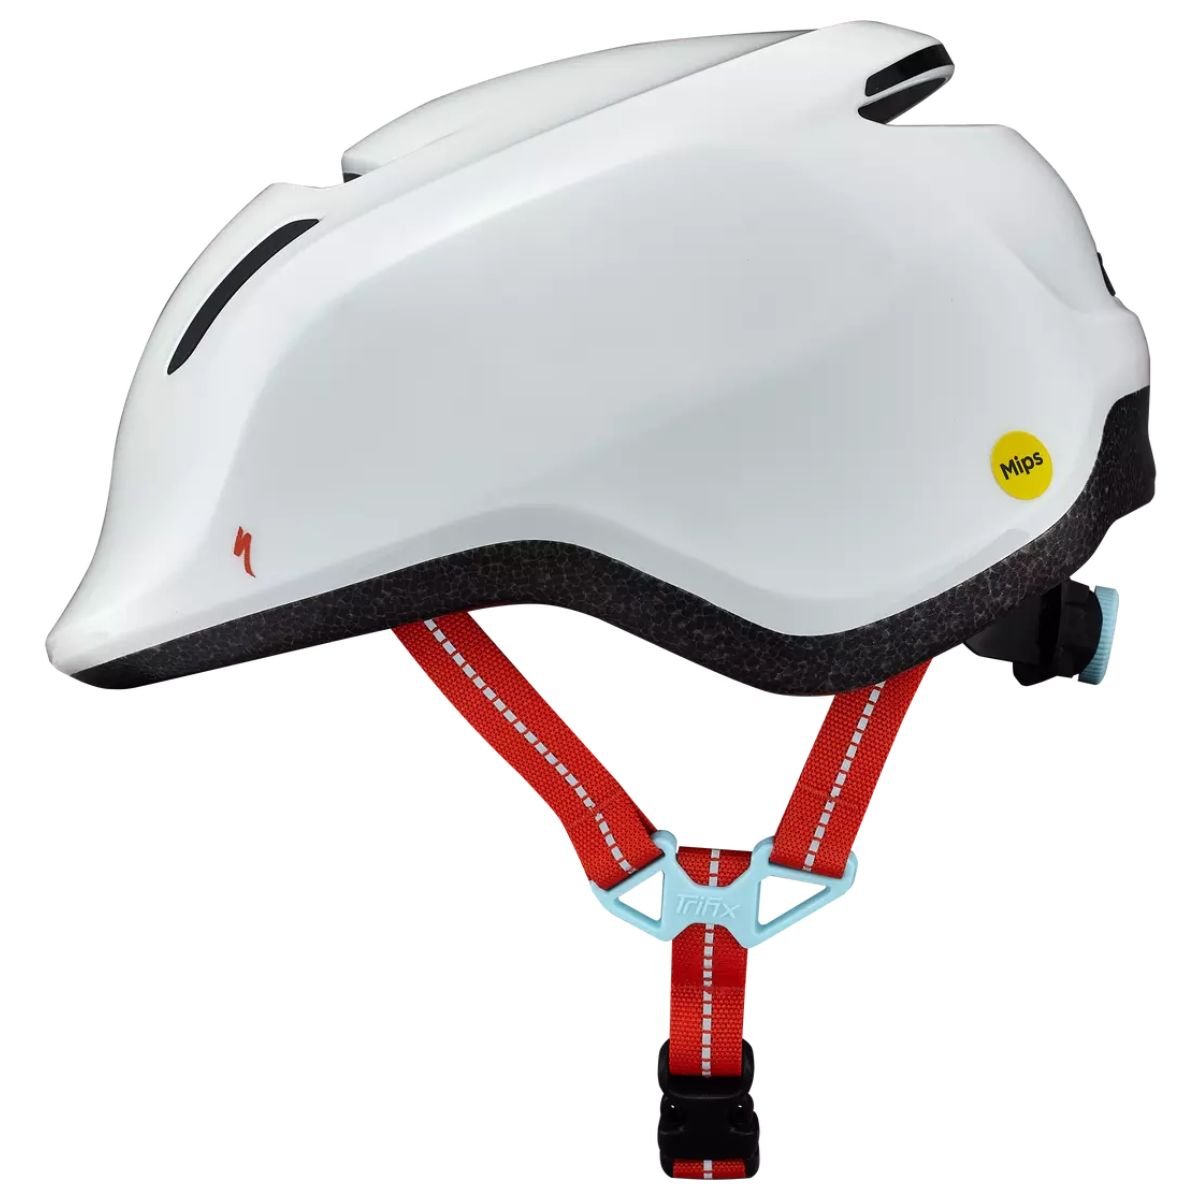 Specialized Mio 2 Helmet bambin